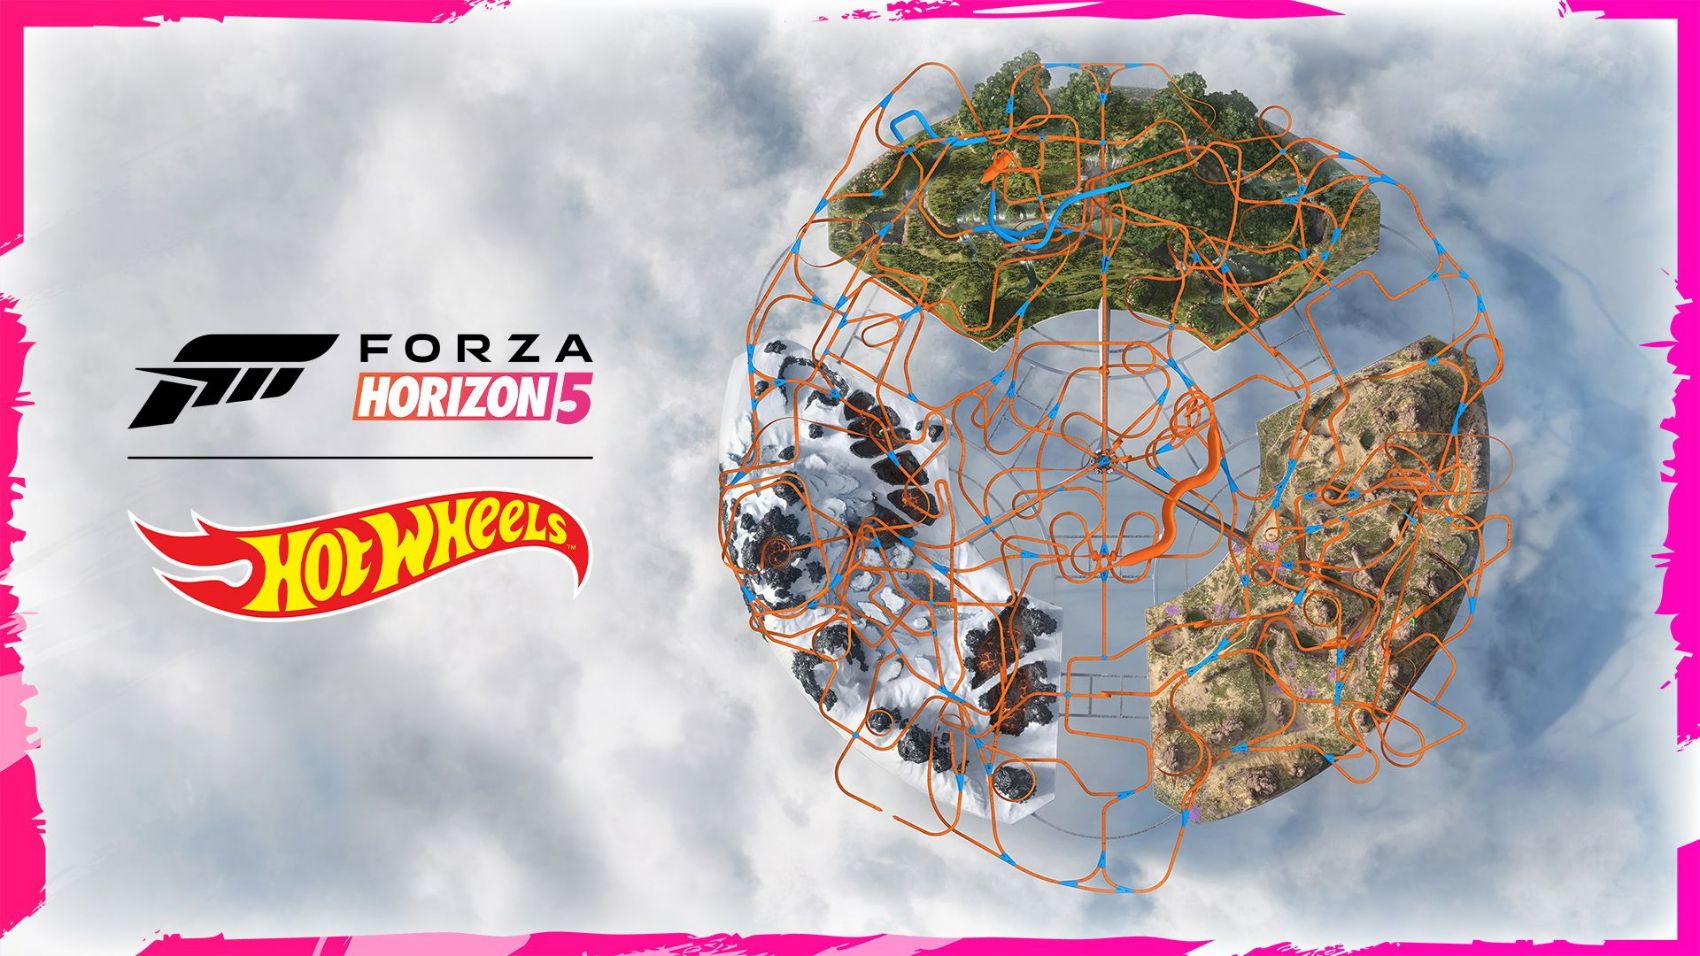 Forza Horizon 5 Hot Wheels Game Review6